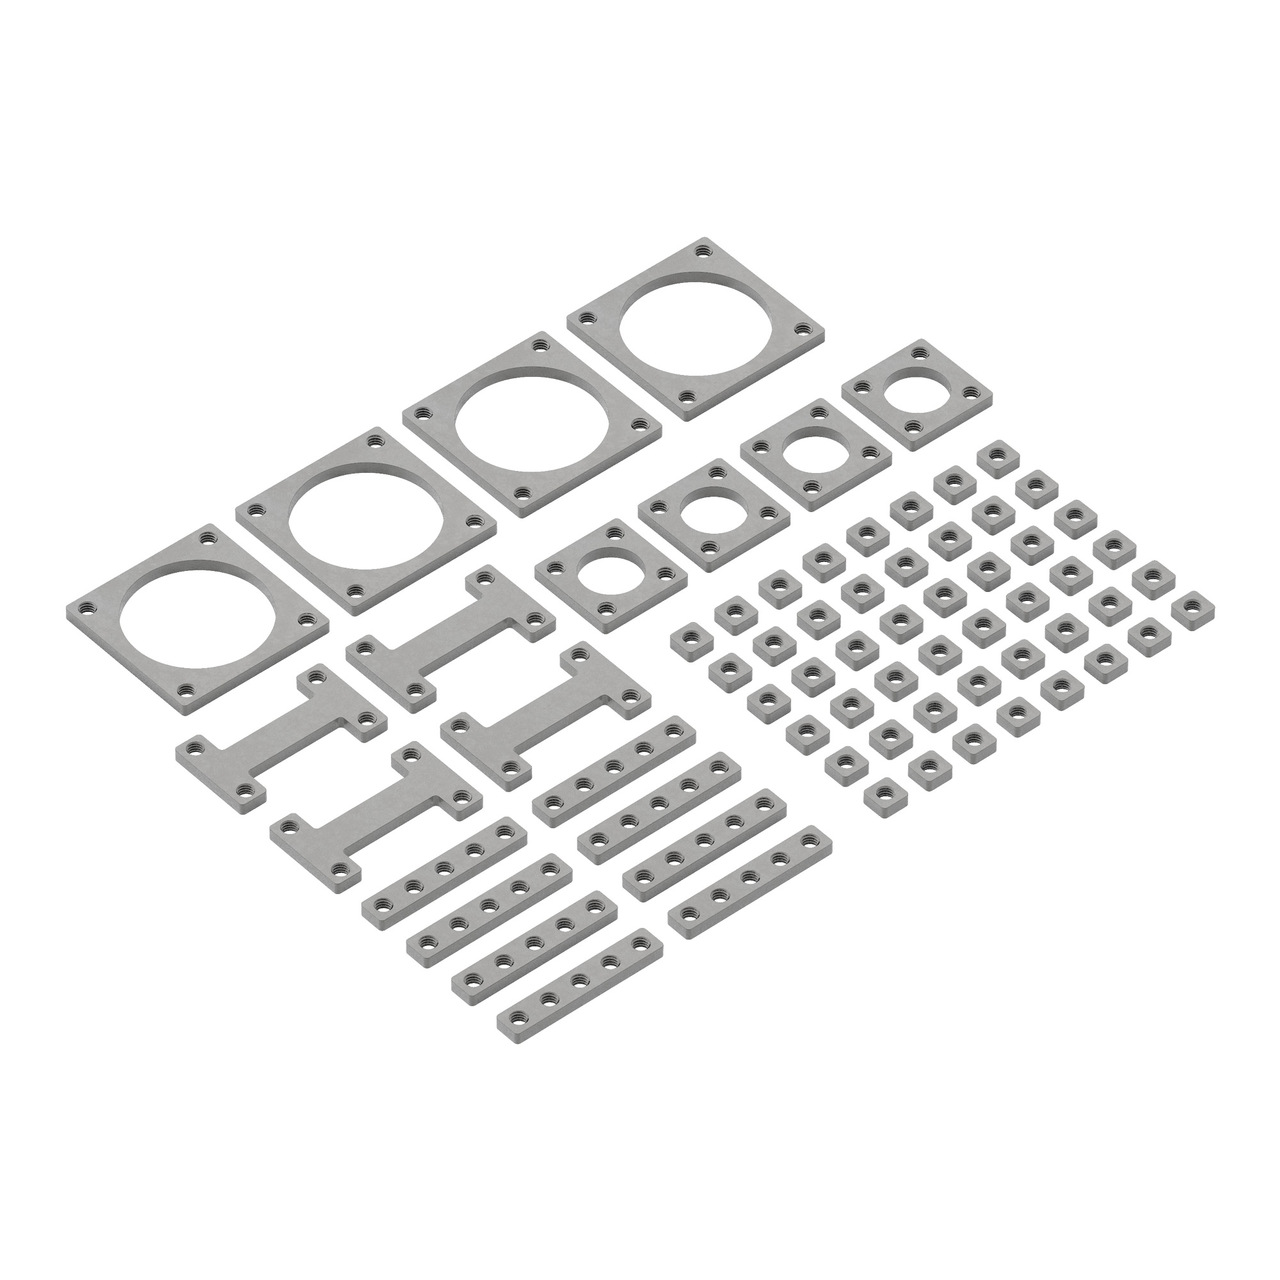 3203-2803-0001 - 2803 Series Threaded Plates Bundle